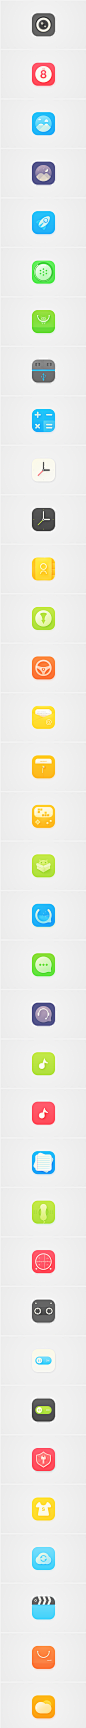 Icon For UFriends - 时间交互艺术-UI中国-专业界面设计平台